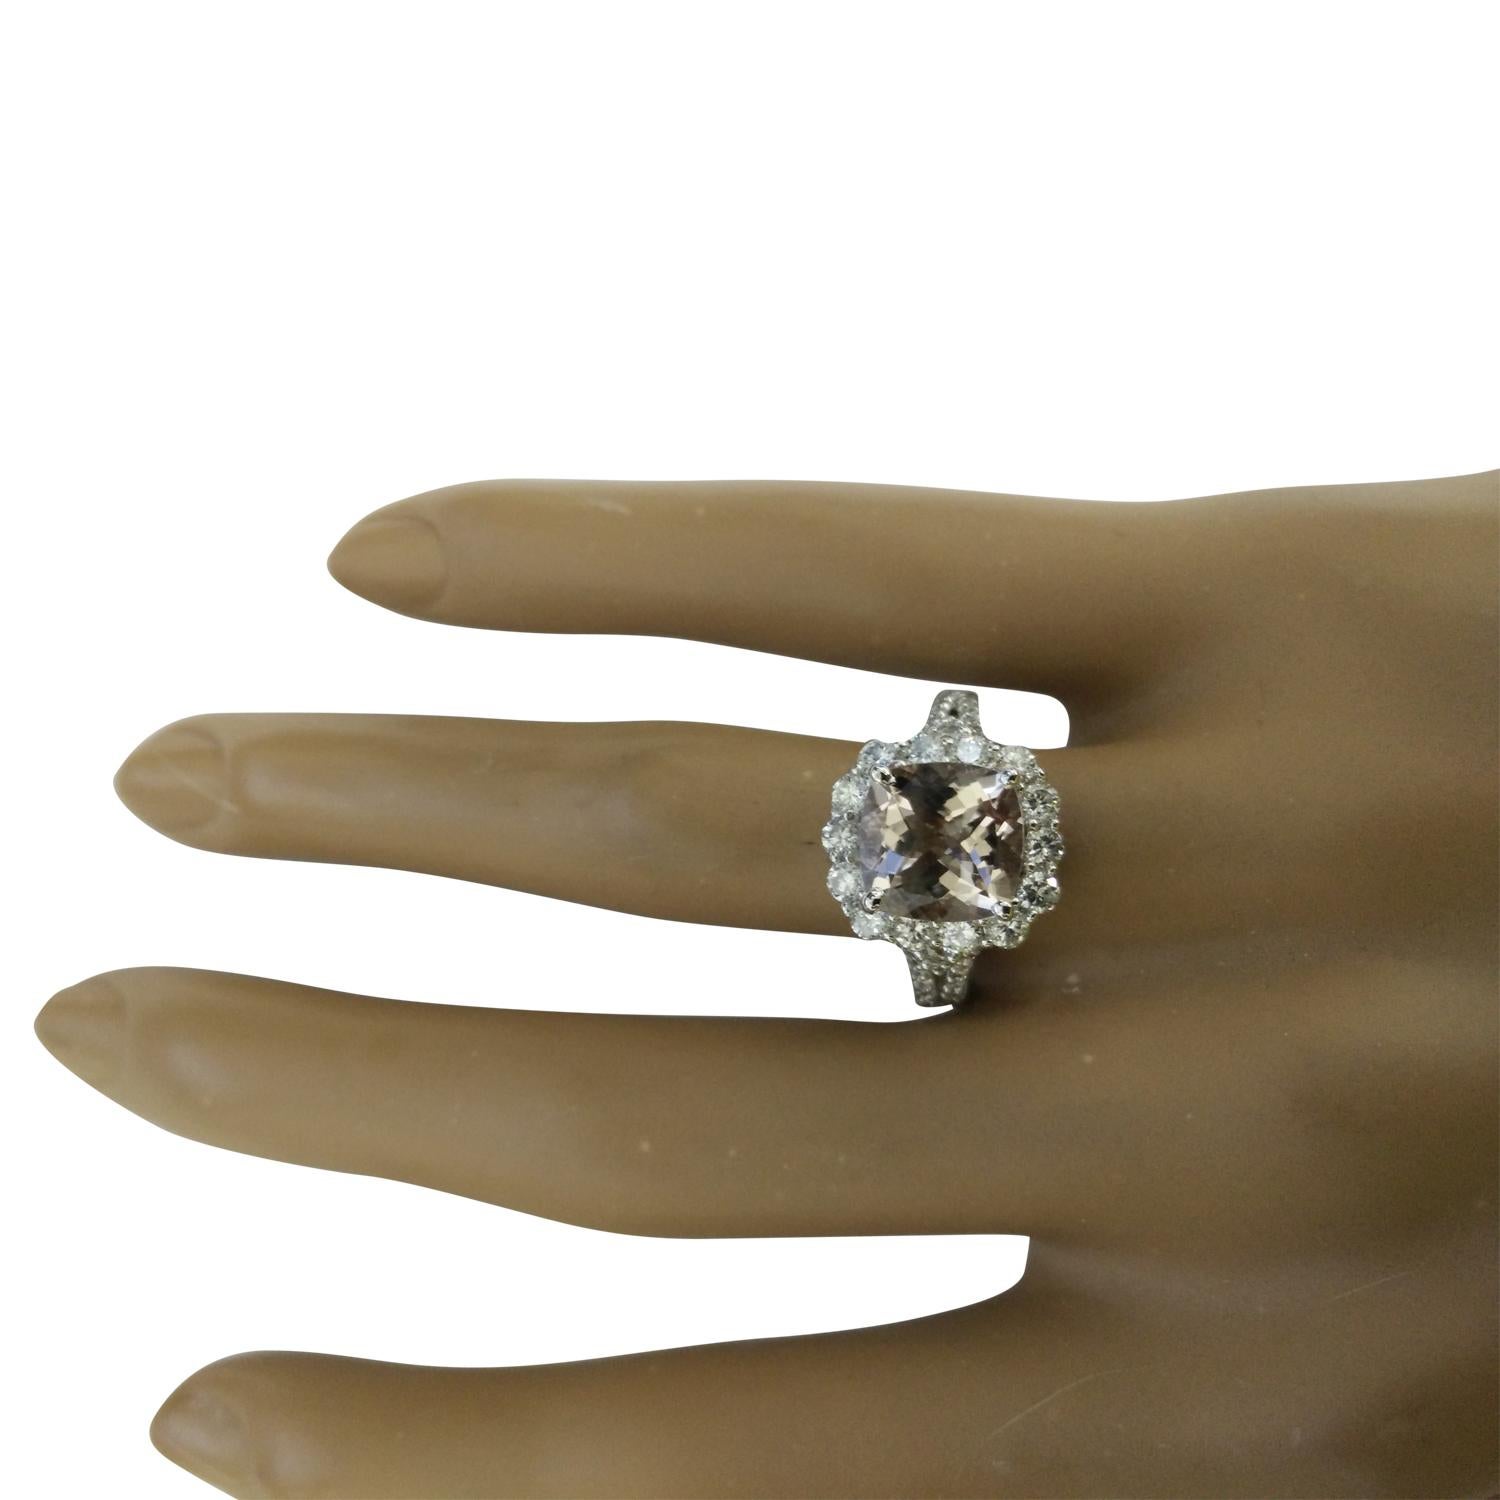 3.70 Carat Natural Morganite 14 Karat Solid White Gold Diamond Ring
Stamped: 14K 
Total Ring Weight: 5 Grams 
Morganite Weight: 2.60 Carat (9.00x9.00 Millimeters)  
Diamond Weight: 1.10 Carat (F-G Color, VS2-SI1 Clarity )
Face Measures: 13.85x12.90